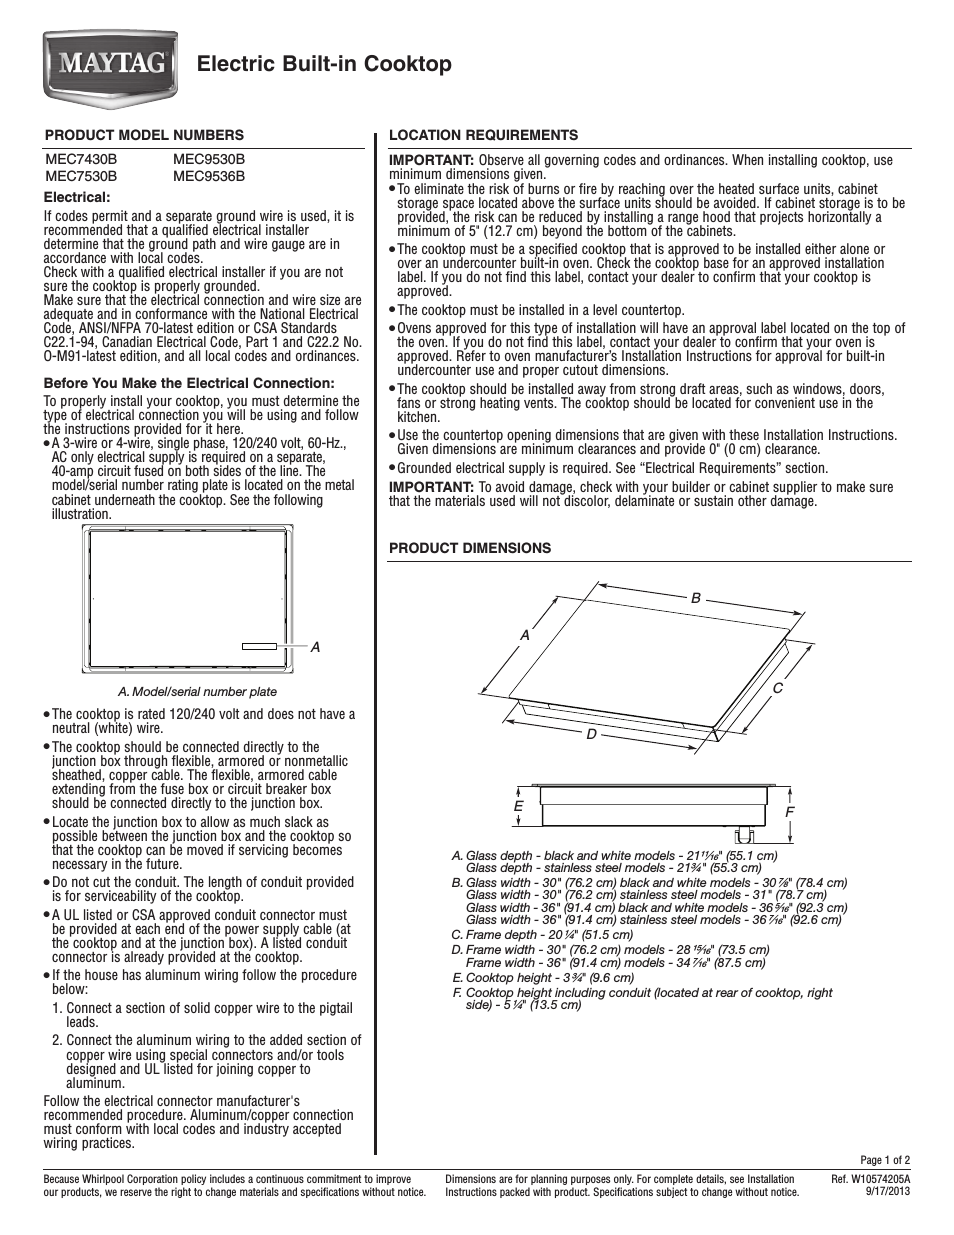 MEC7430BS Dimension Guide (Page 1)